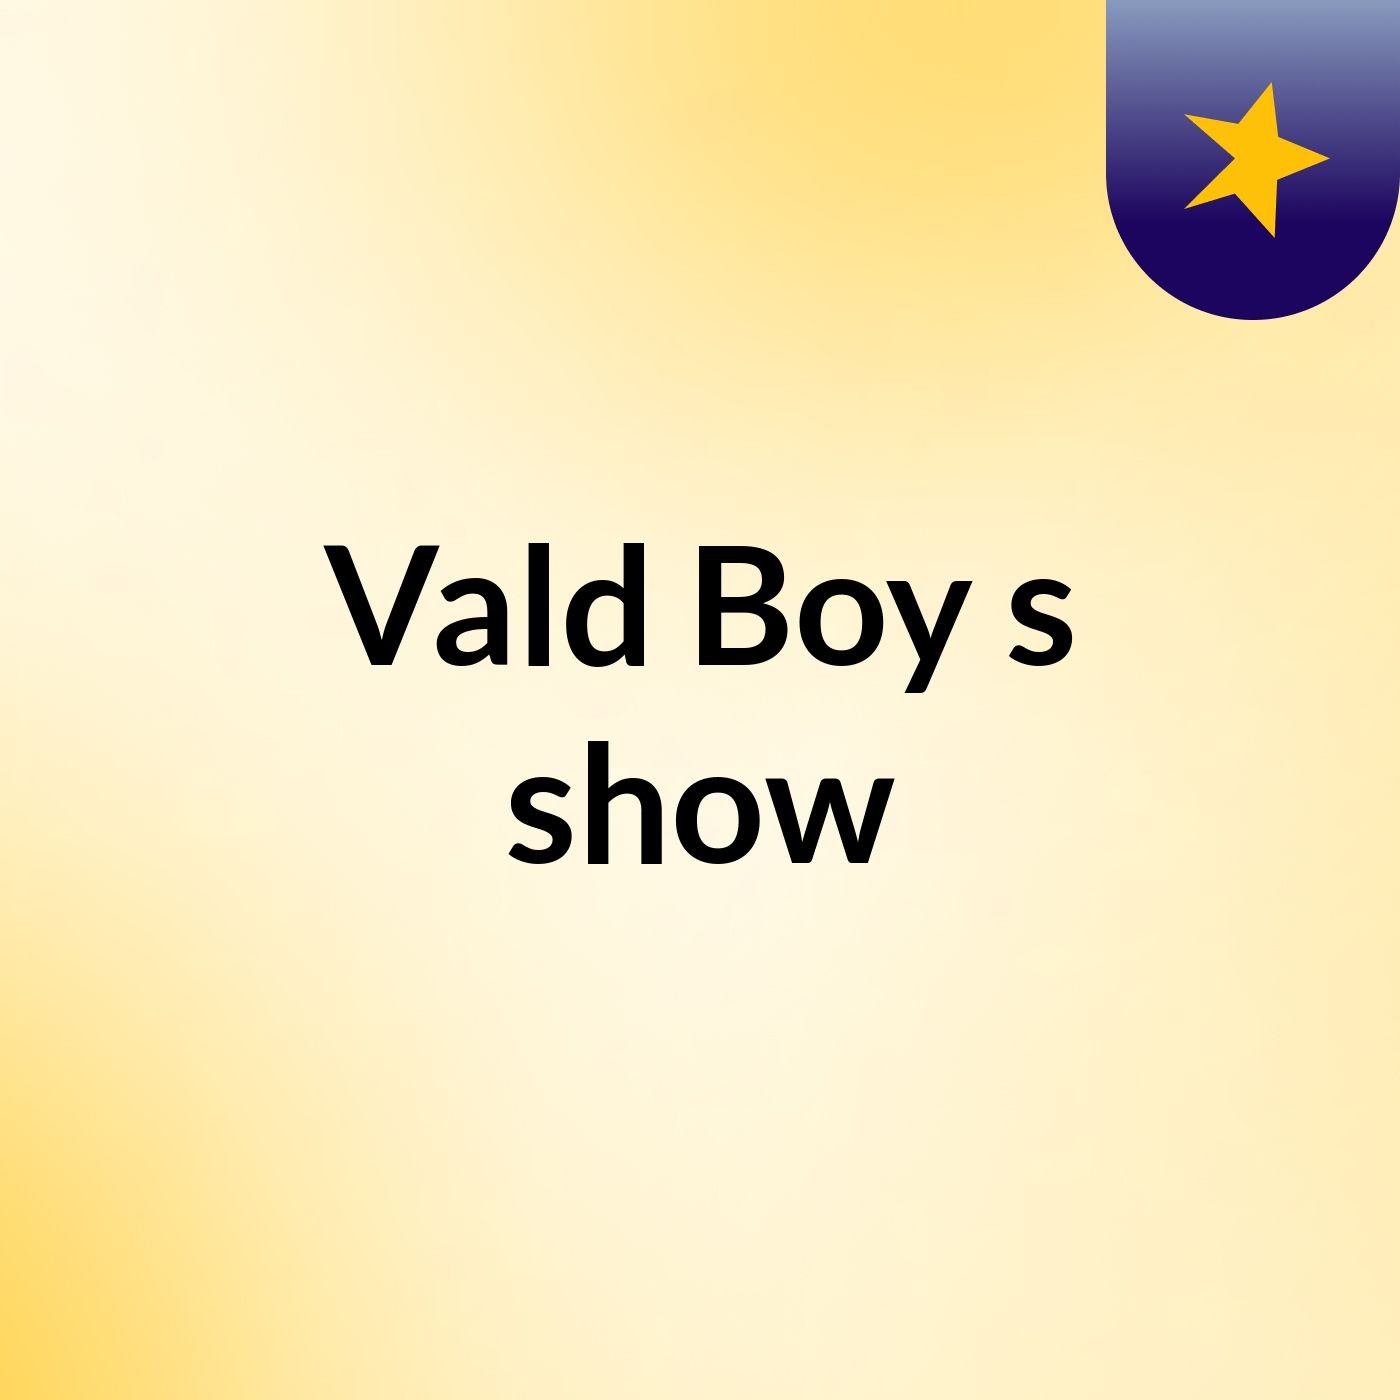 Vald Boy's show